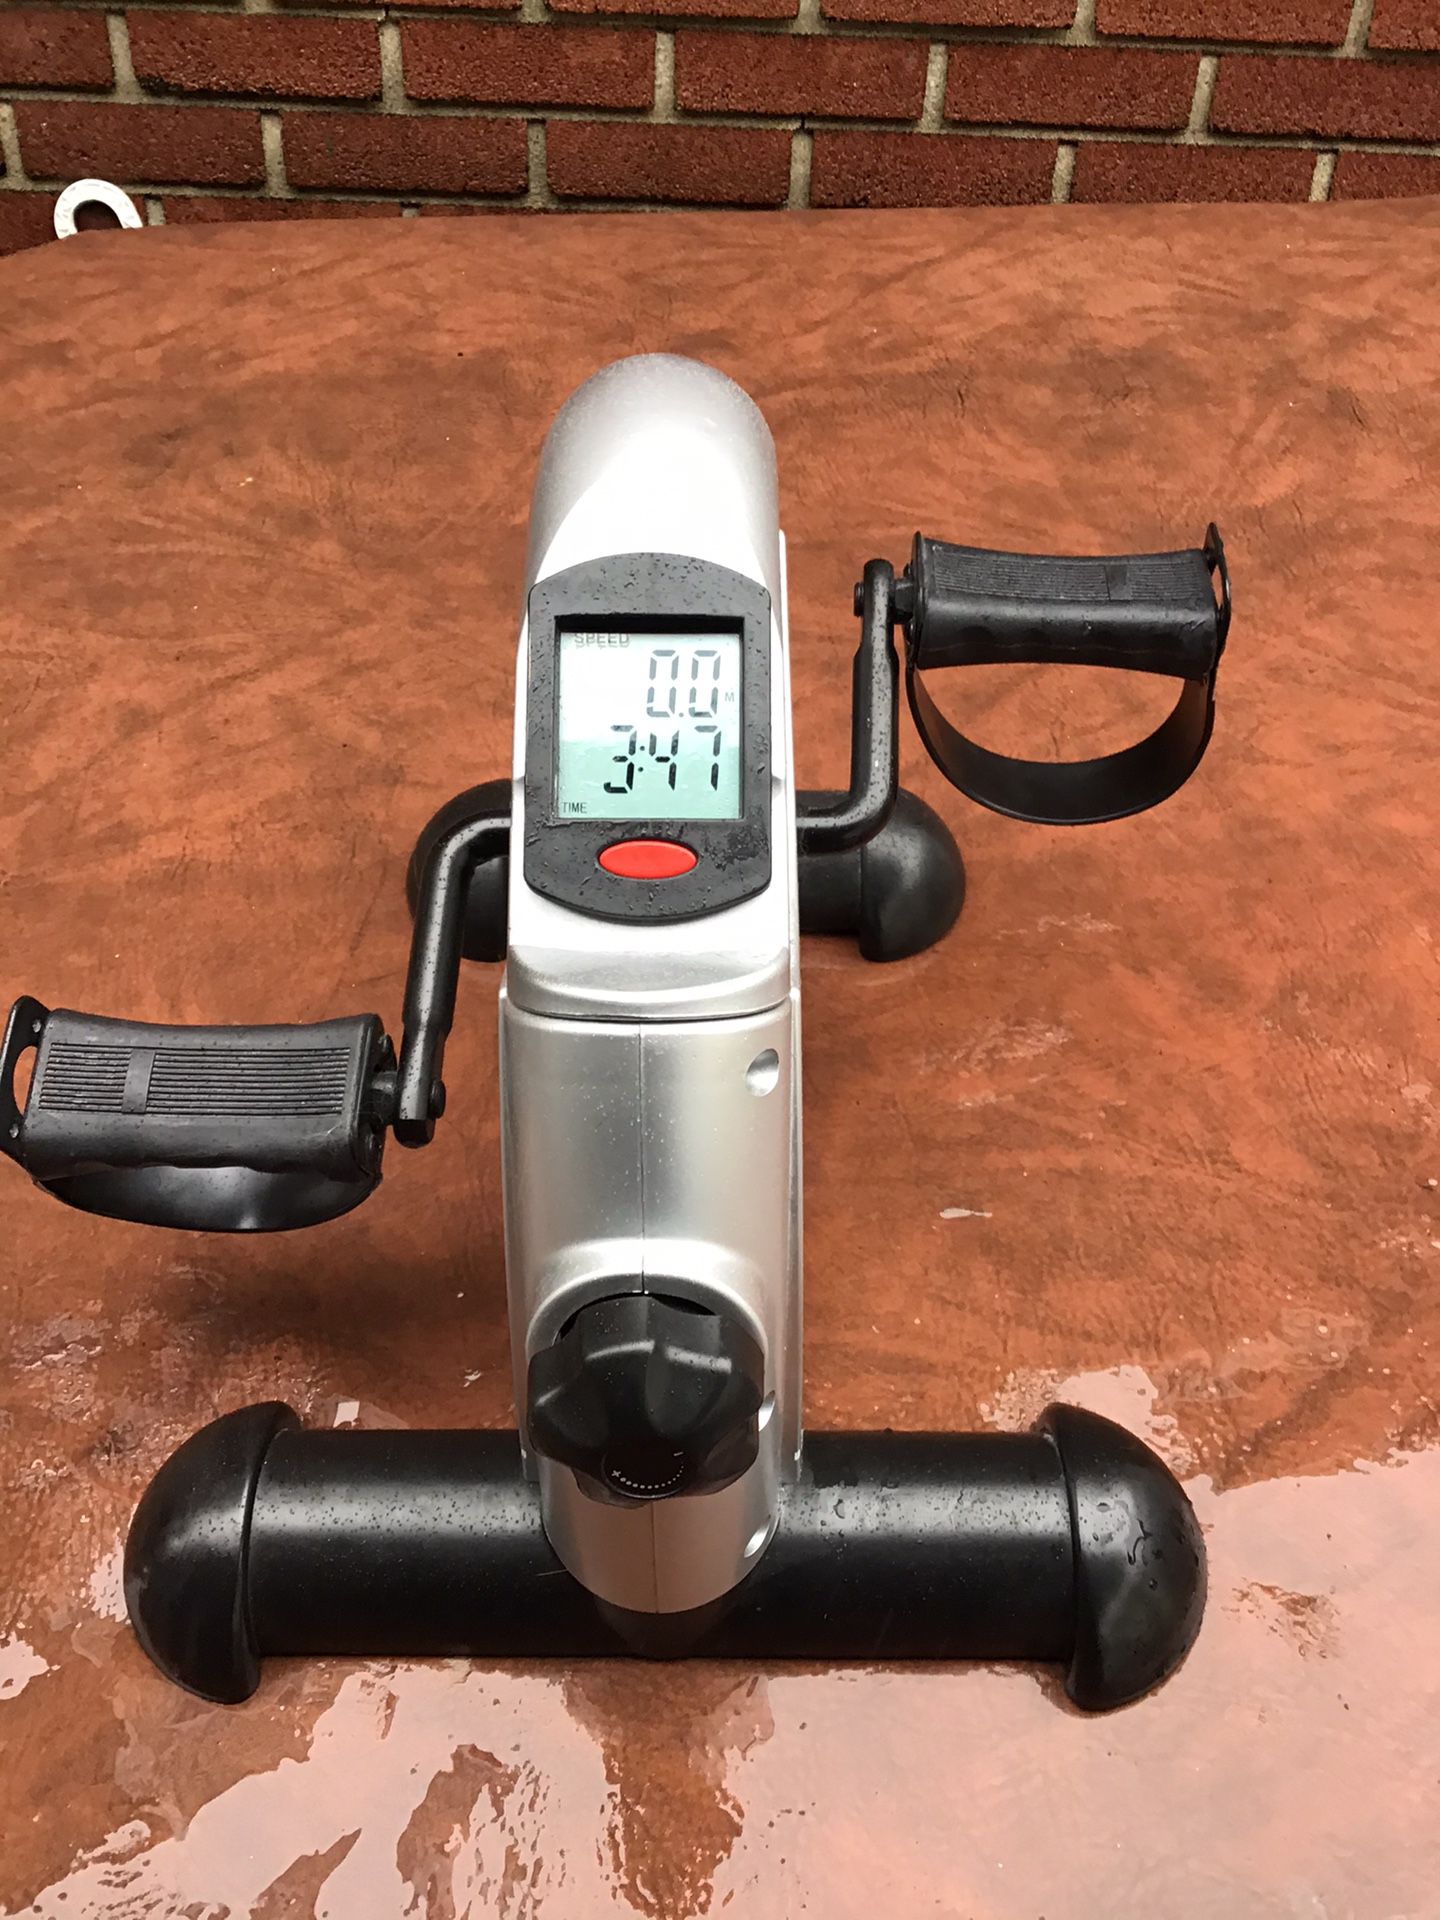 Vive Pedal Exerciser - Stationary Exercise Leg Peddler - Low Impact, Portable Mini Cycle Bike for Under Your Office Desk - Slim Design for Arm or Foo